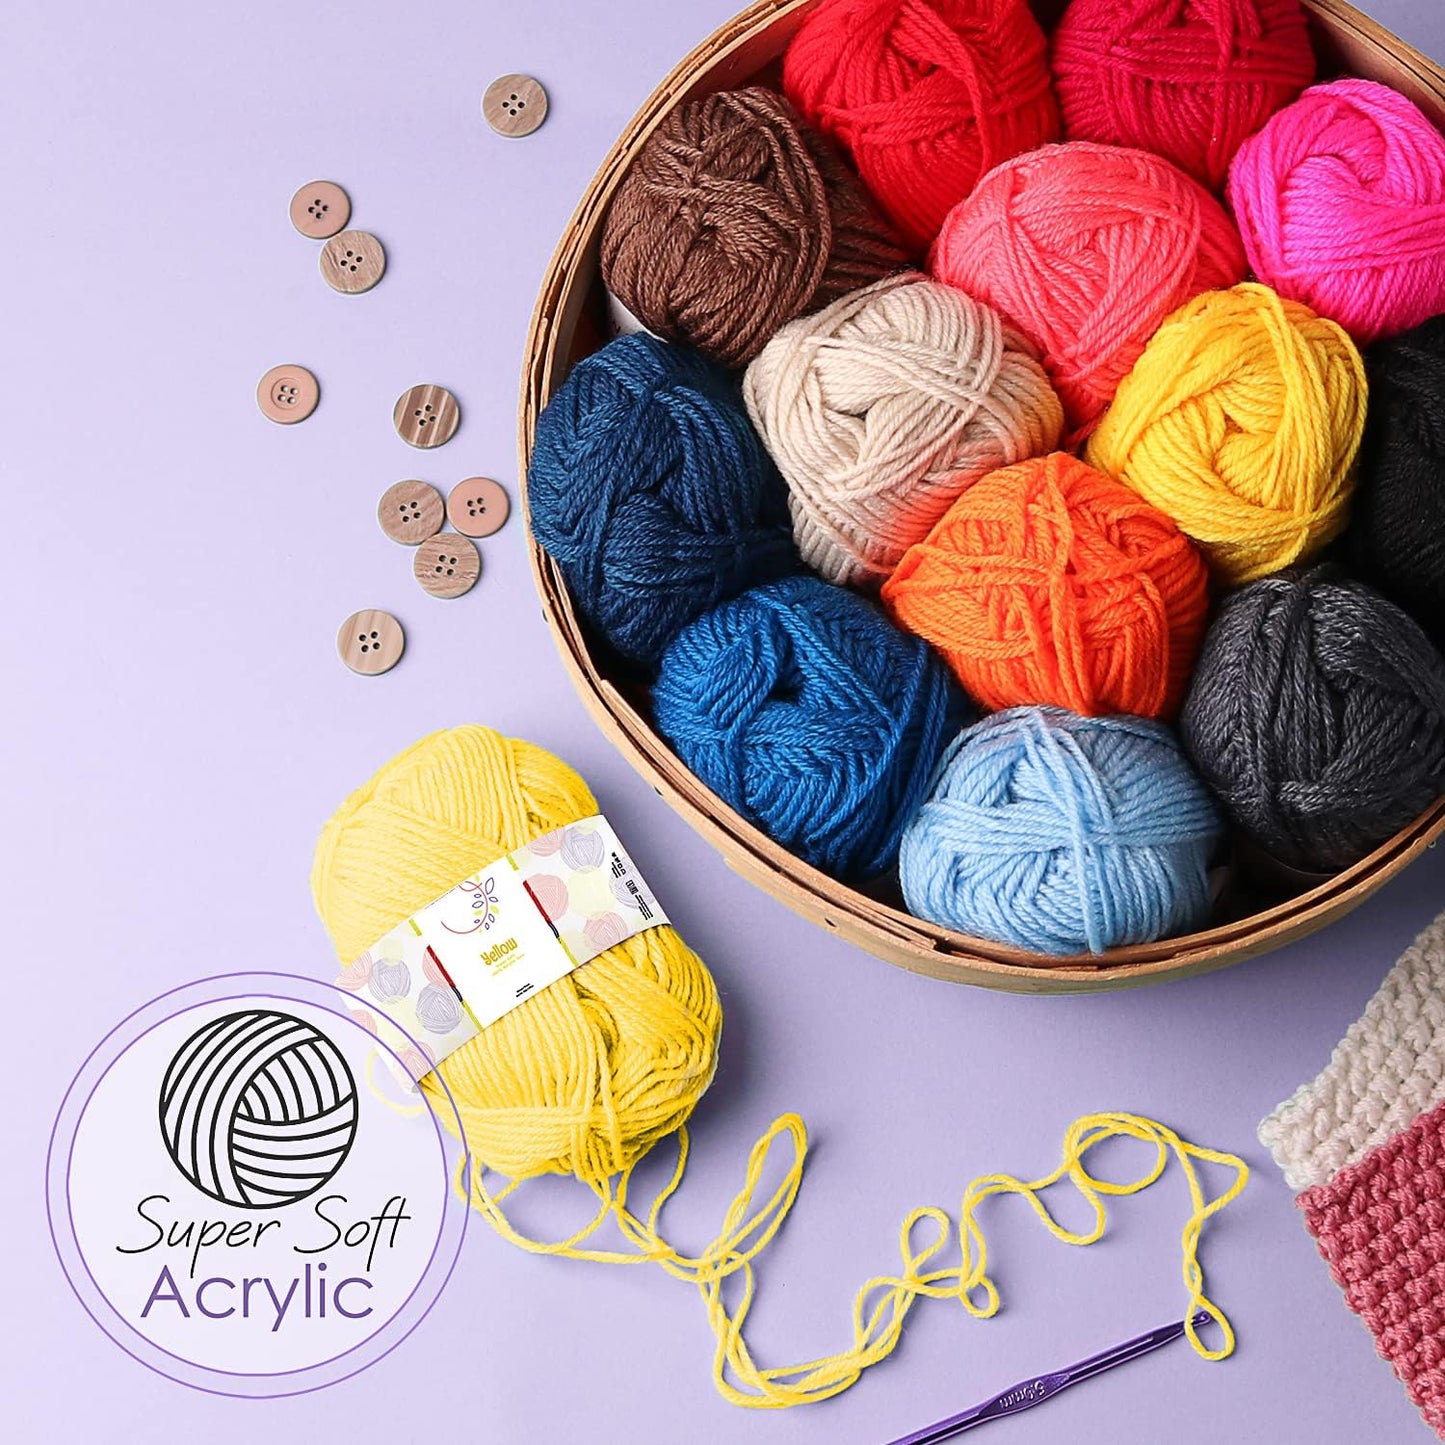 80 Piece Crochet Kit with Crochet Hooks Yarn Set + Project Books